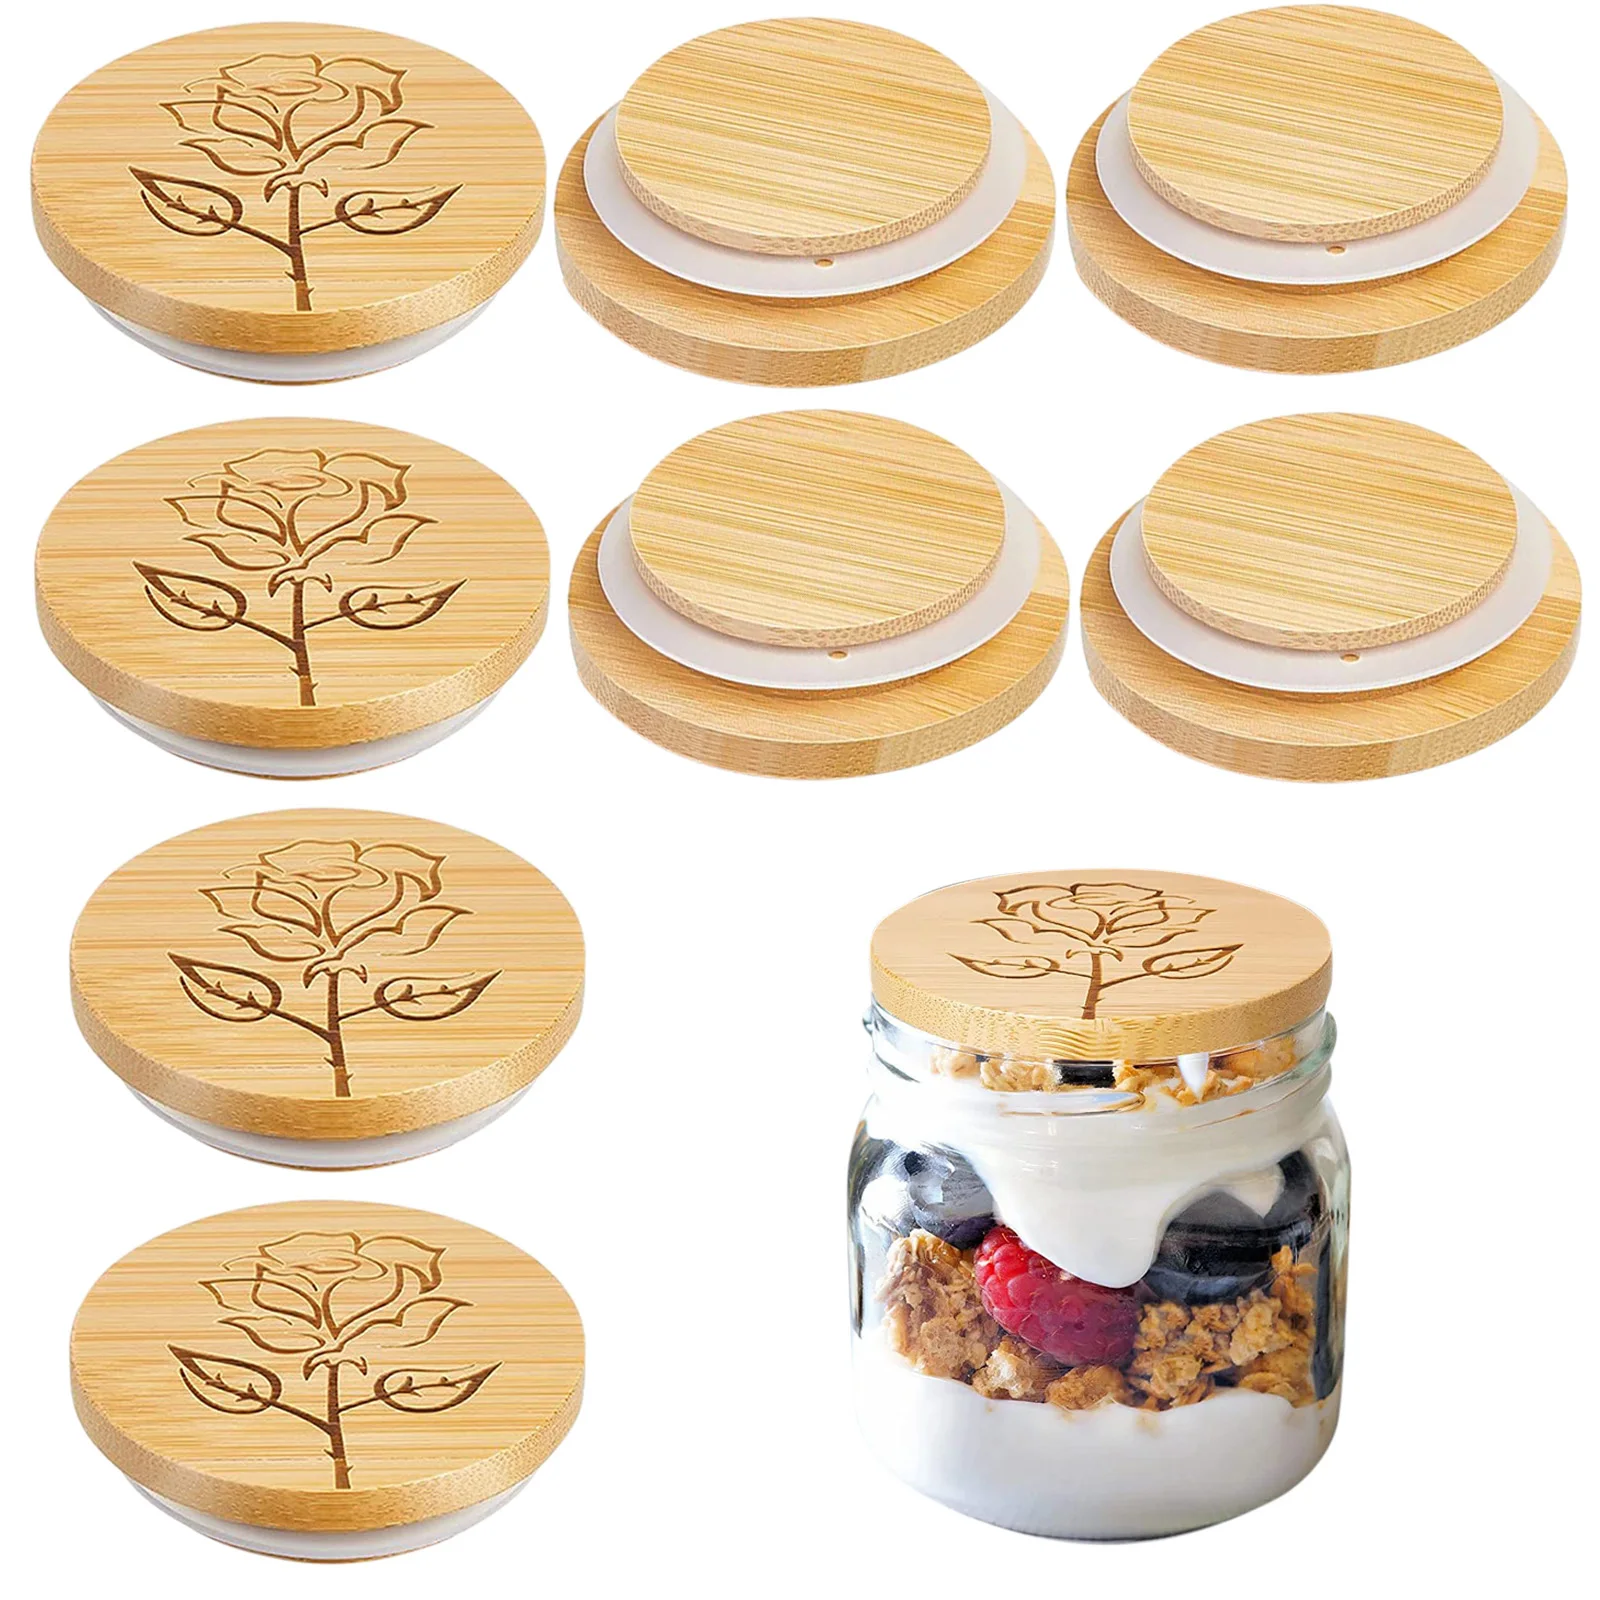 

Reusable Bamboo Caps Mason Jar Lids Covers Silicone Sealing Wooden Fresh-Keeping Lids Drinking Canning Jars Supplies